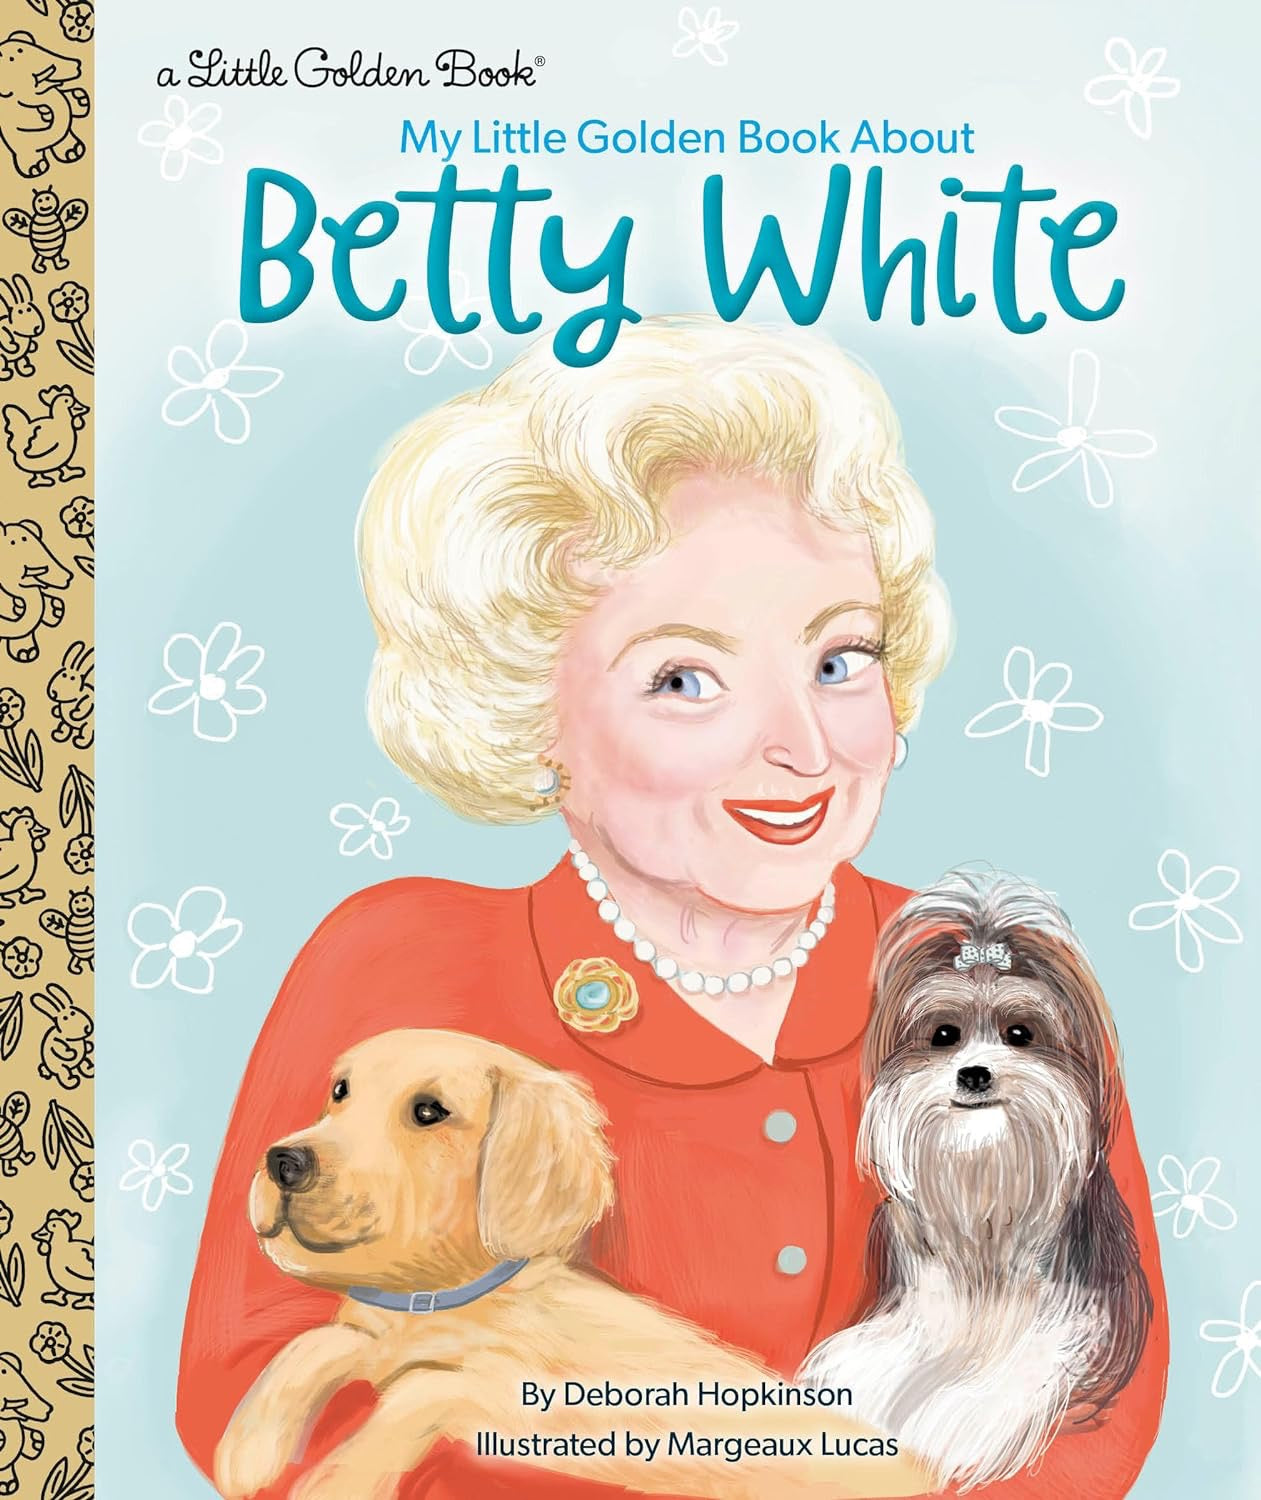 "Betty White" Little Golden Book